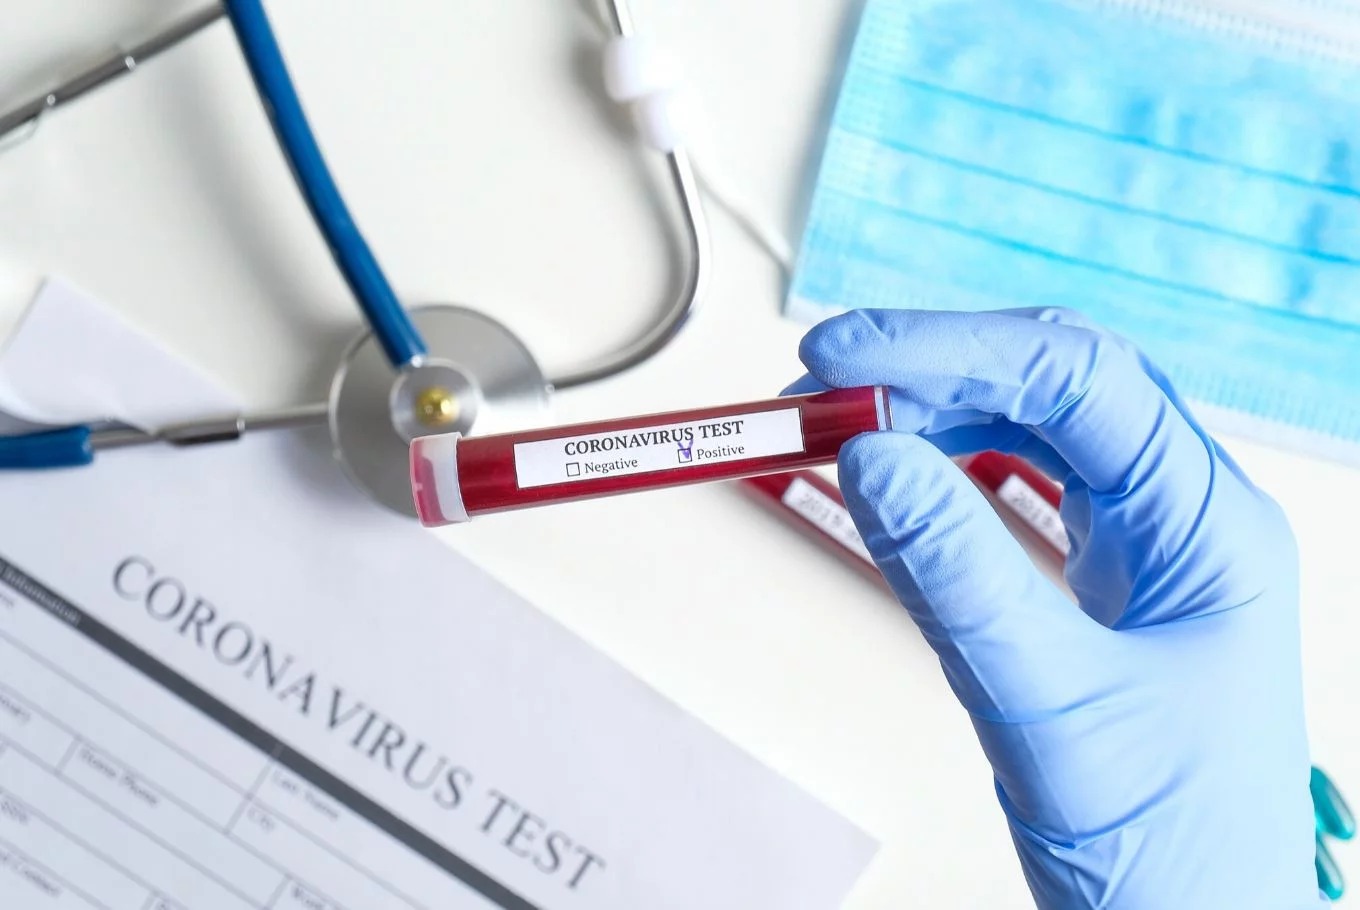 Uganda’s Cases of Coronavirus Hit 507 as 18 More People Test Positive